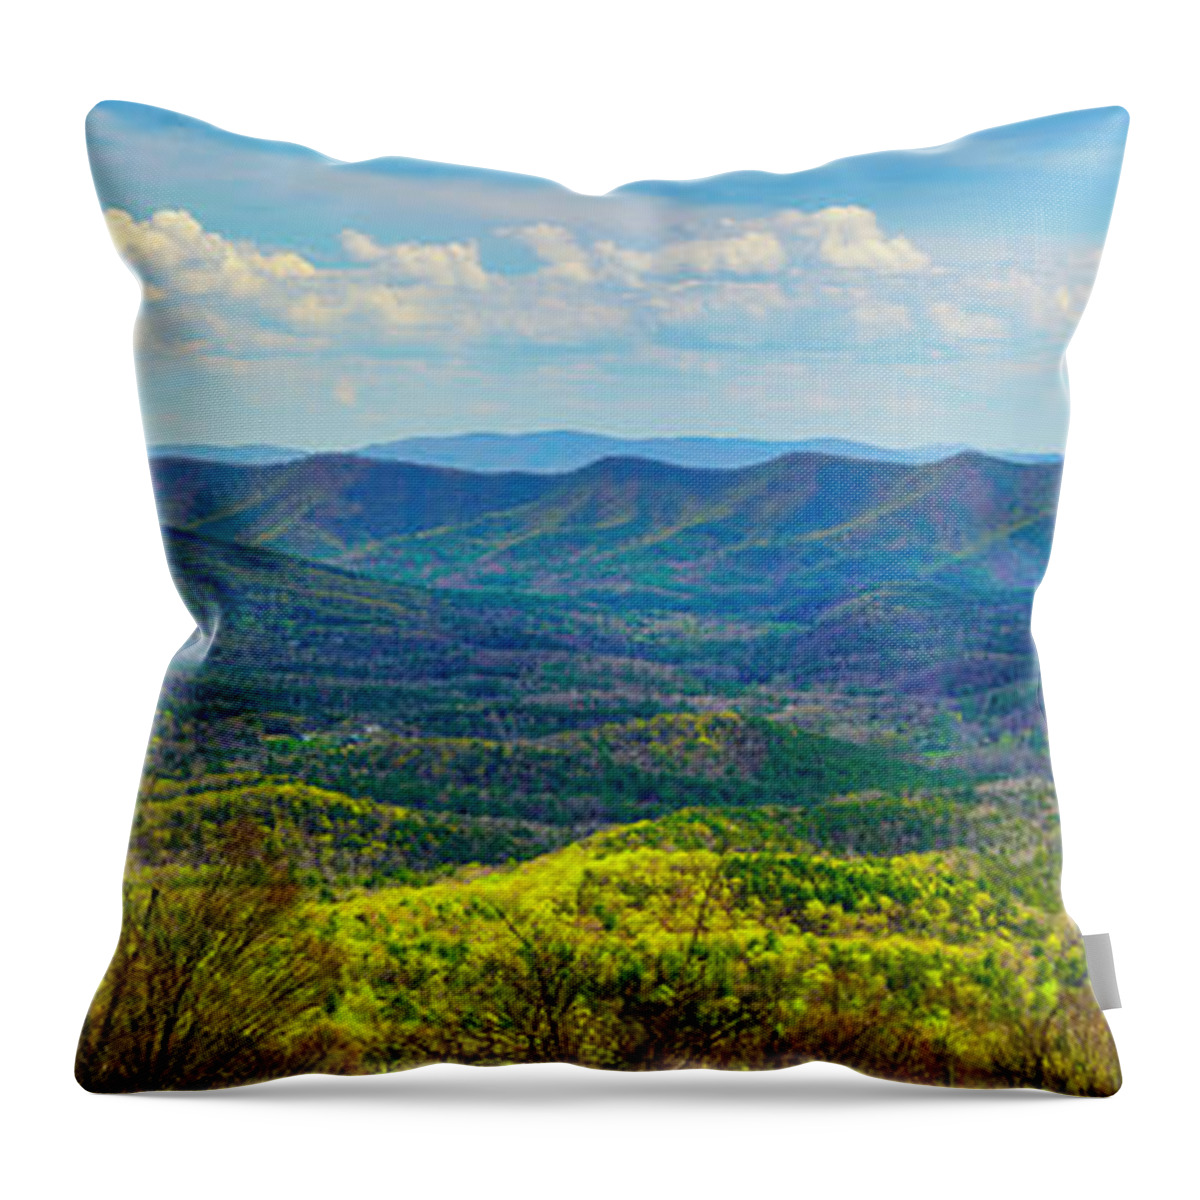 Big Walker Mountain Throw Pillow featuring the photograph Big Walker Mountain Vista by Dale R Carlson